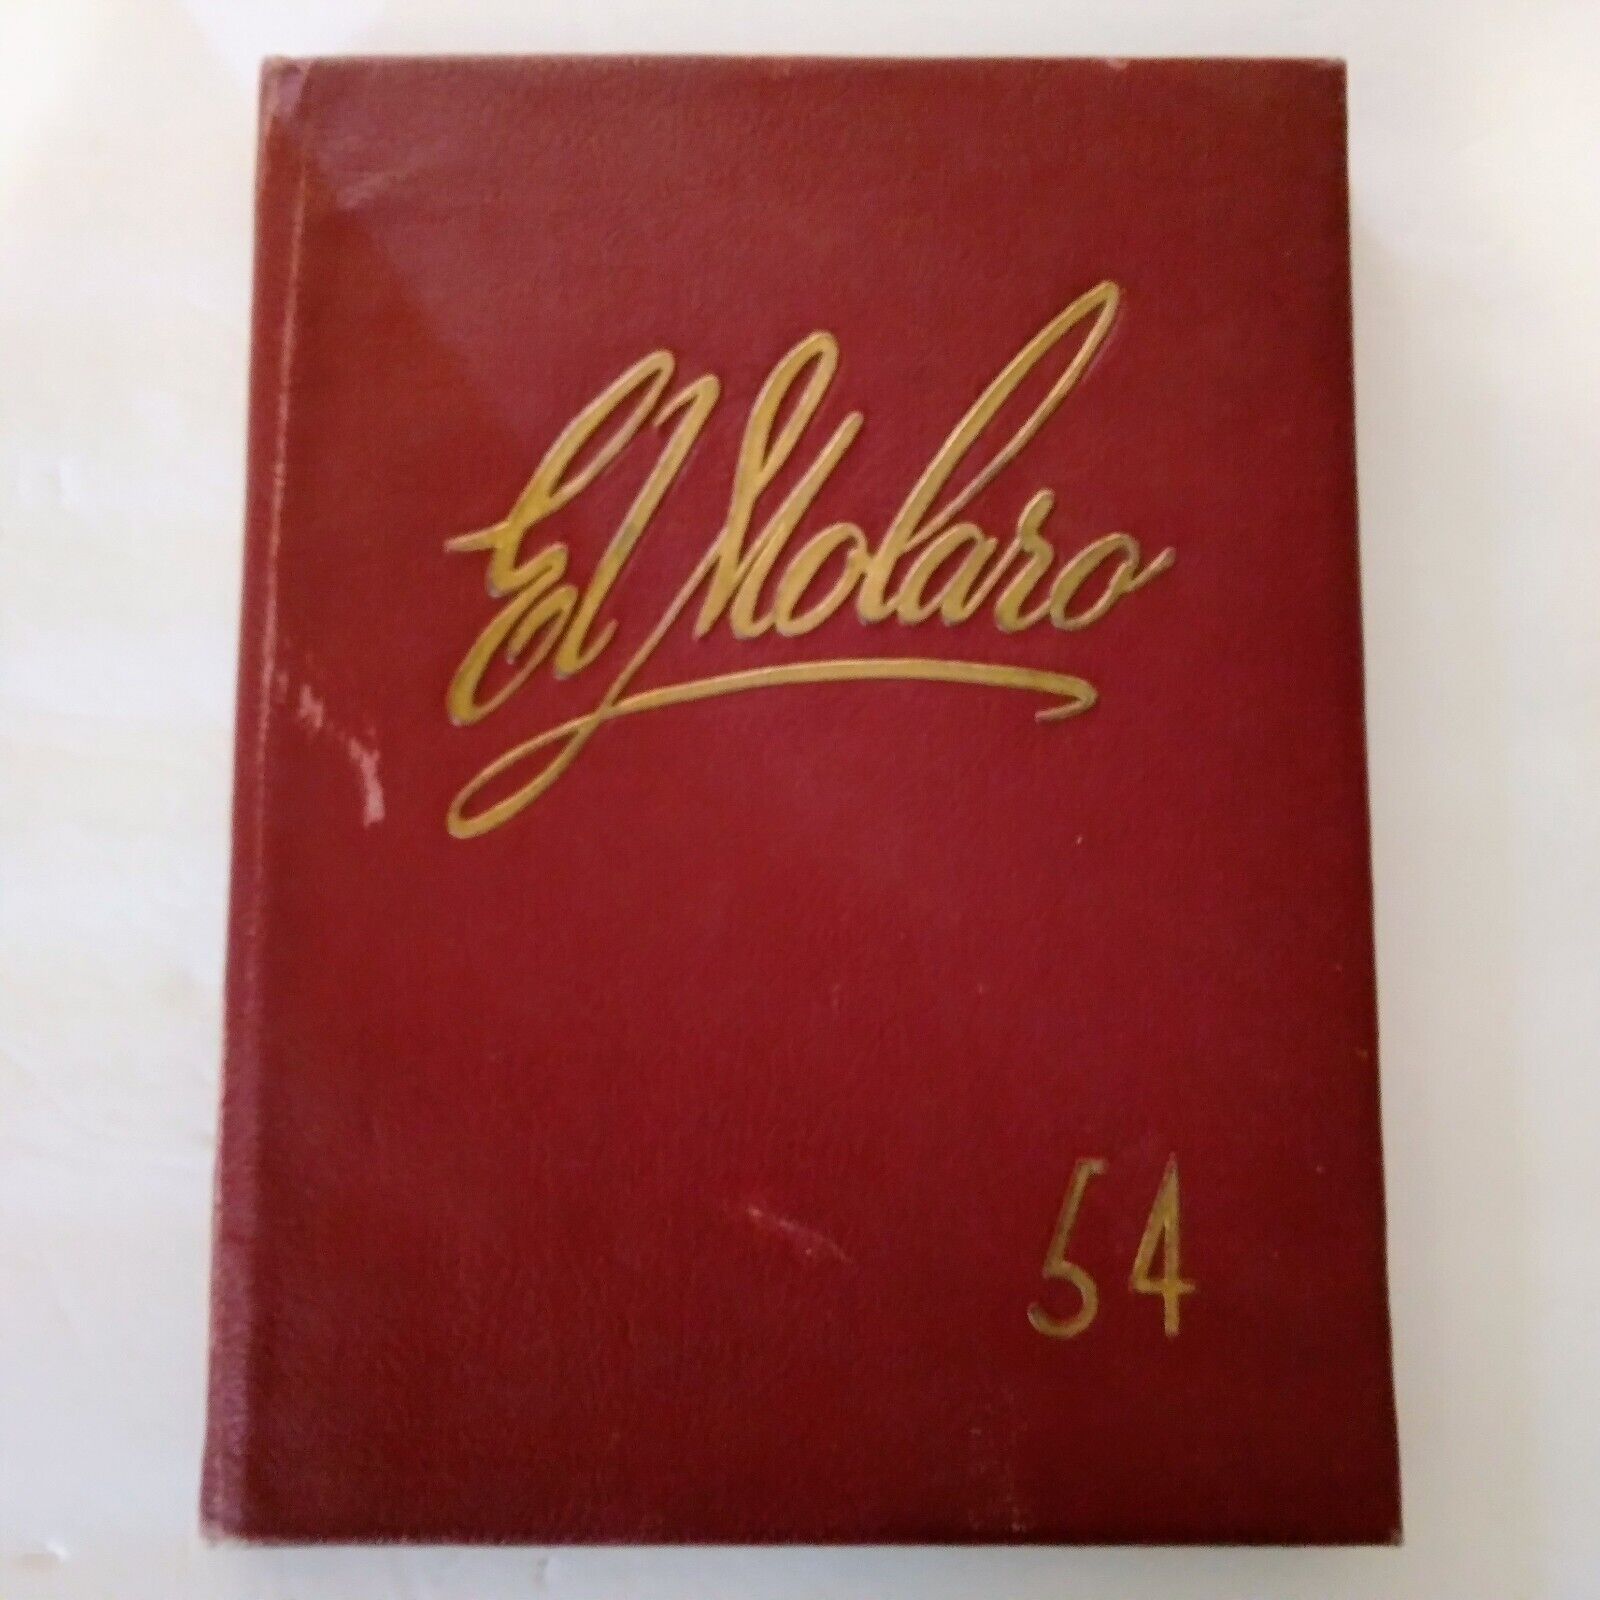 1954 MCM YEARBOOK University Southern California DENTISTS SCHOOL  The EL MOLARO 